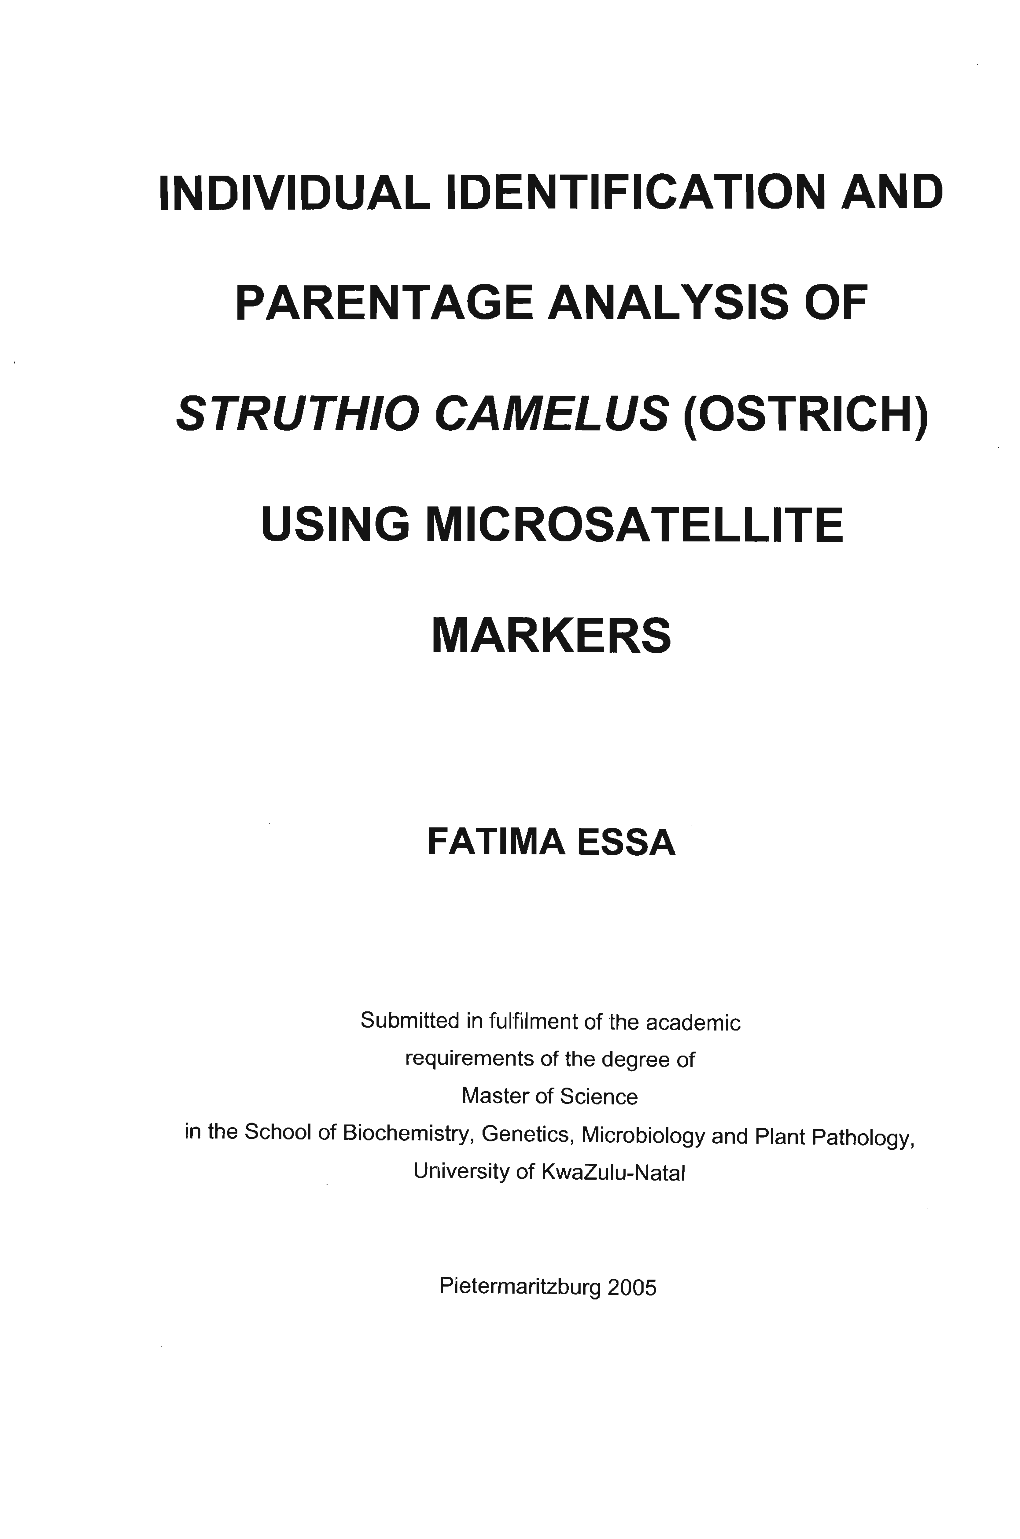 Individual Identification and Parentage Analysis of Struthio Camelus